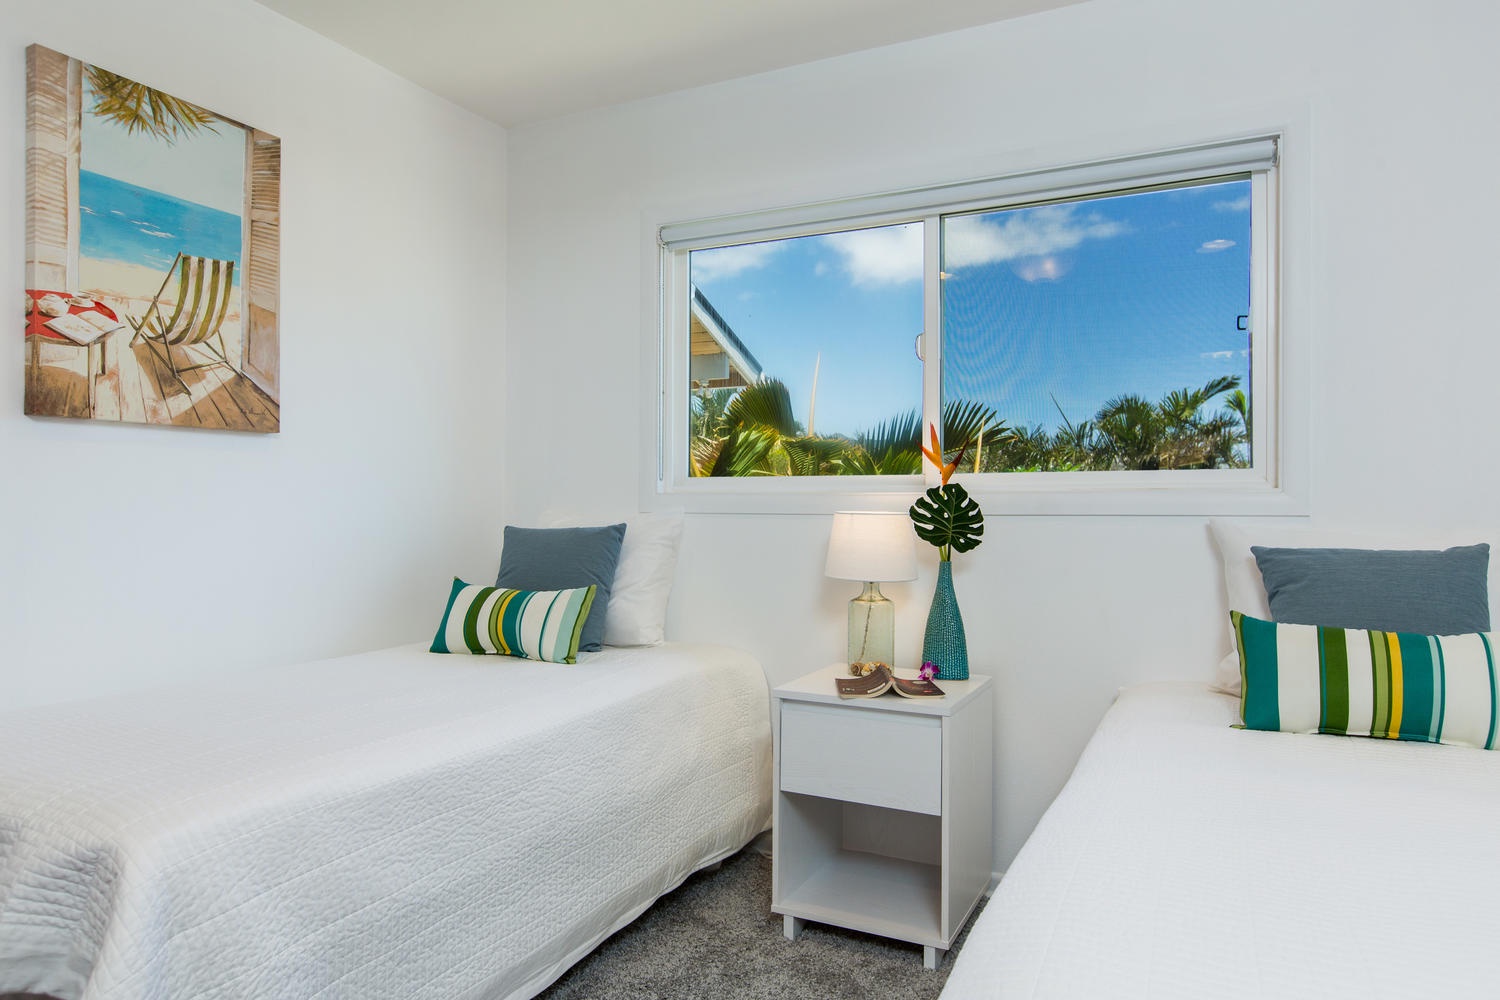 Honolulu Vacation Rentals, Makani Lani - Bedroom 2, Twin bedroom with views of Koko Head.